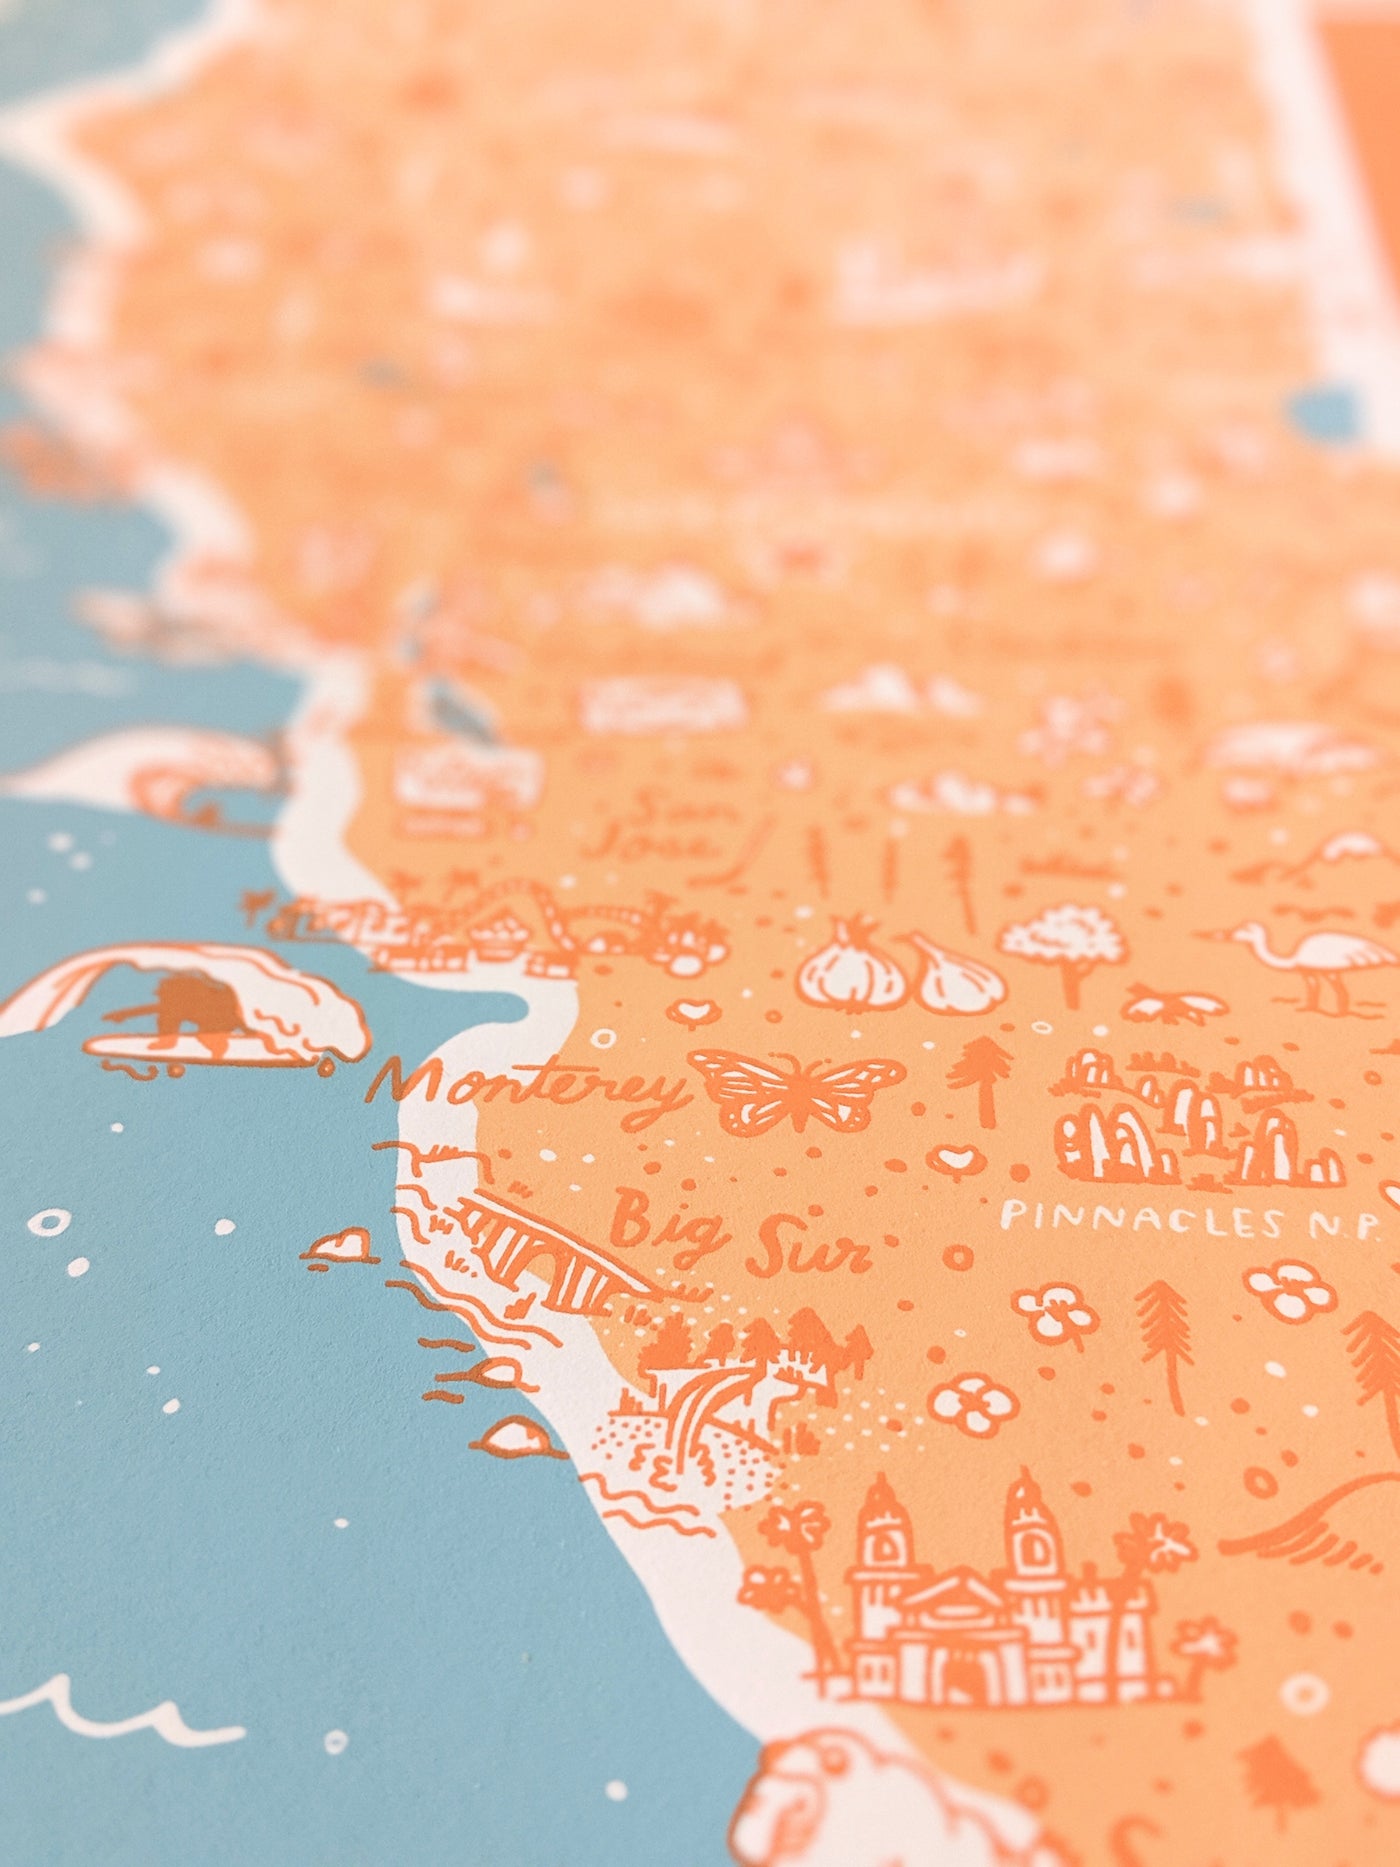 California Map Print by Brainstorm